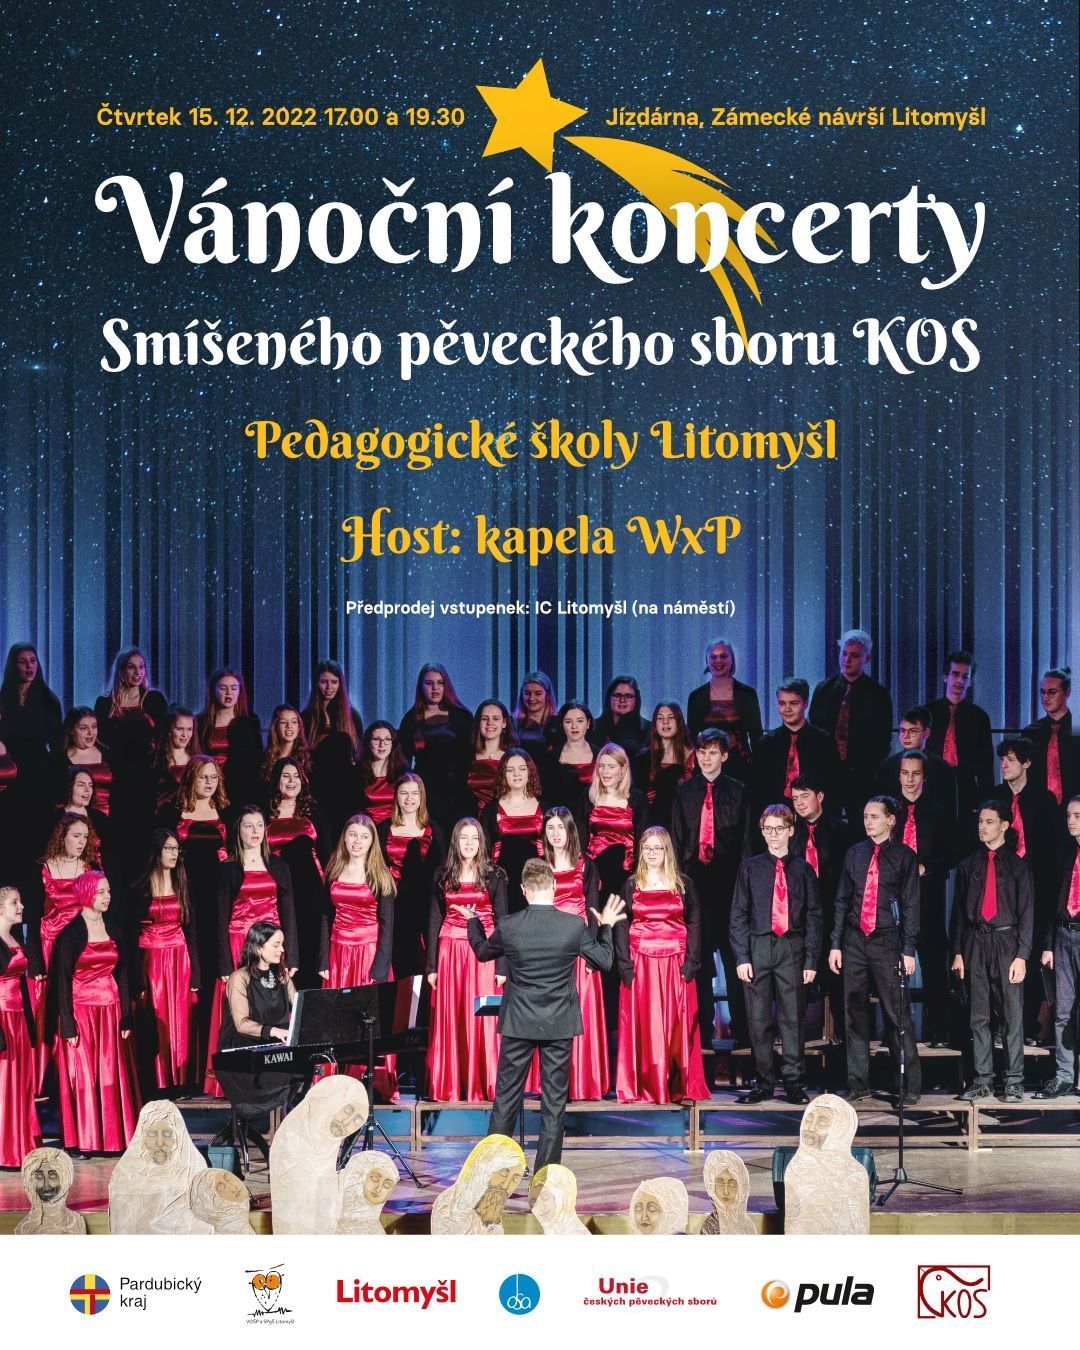 Christmas Concert of the Kos Choir